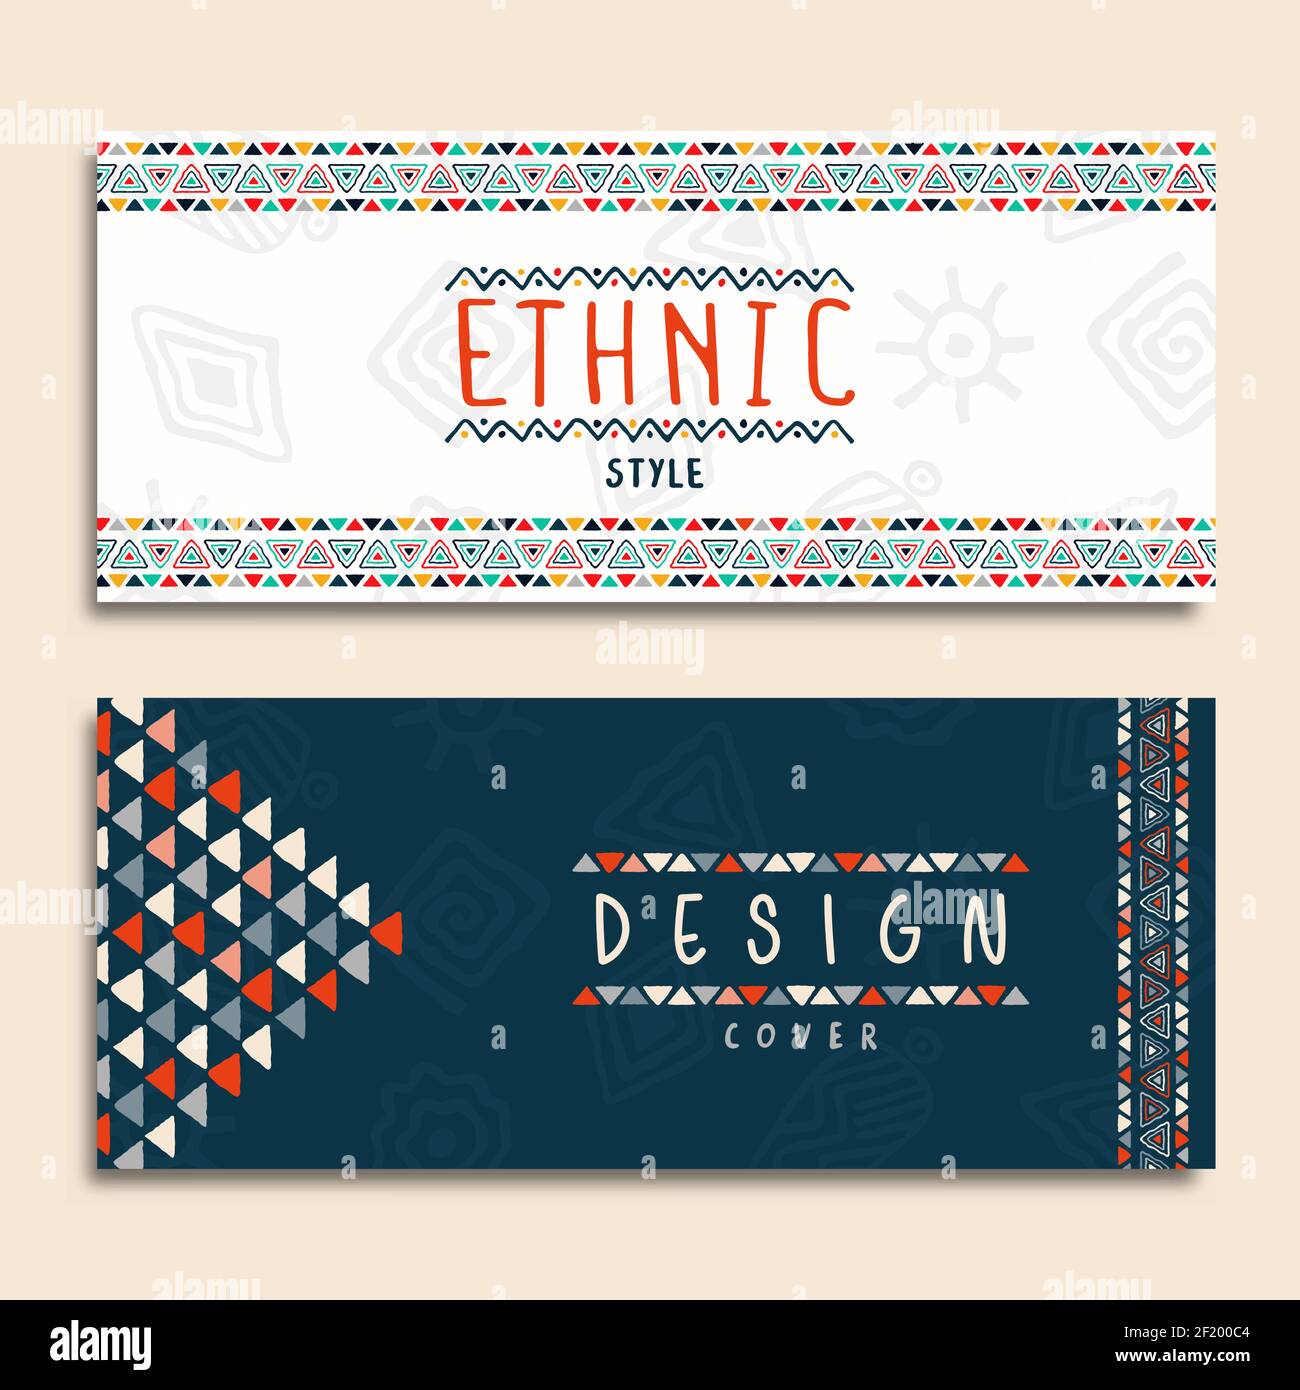 Ethnische Kunst Stil Banner Illustration Set. Abstrakte Tribal Dekoration, geometrische Form Doodle Template-Kollektion für Mode-Präsentation oder afrikanische c Stock Vektor